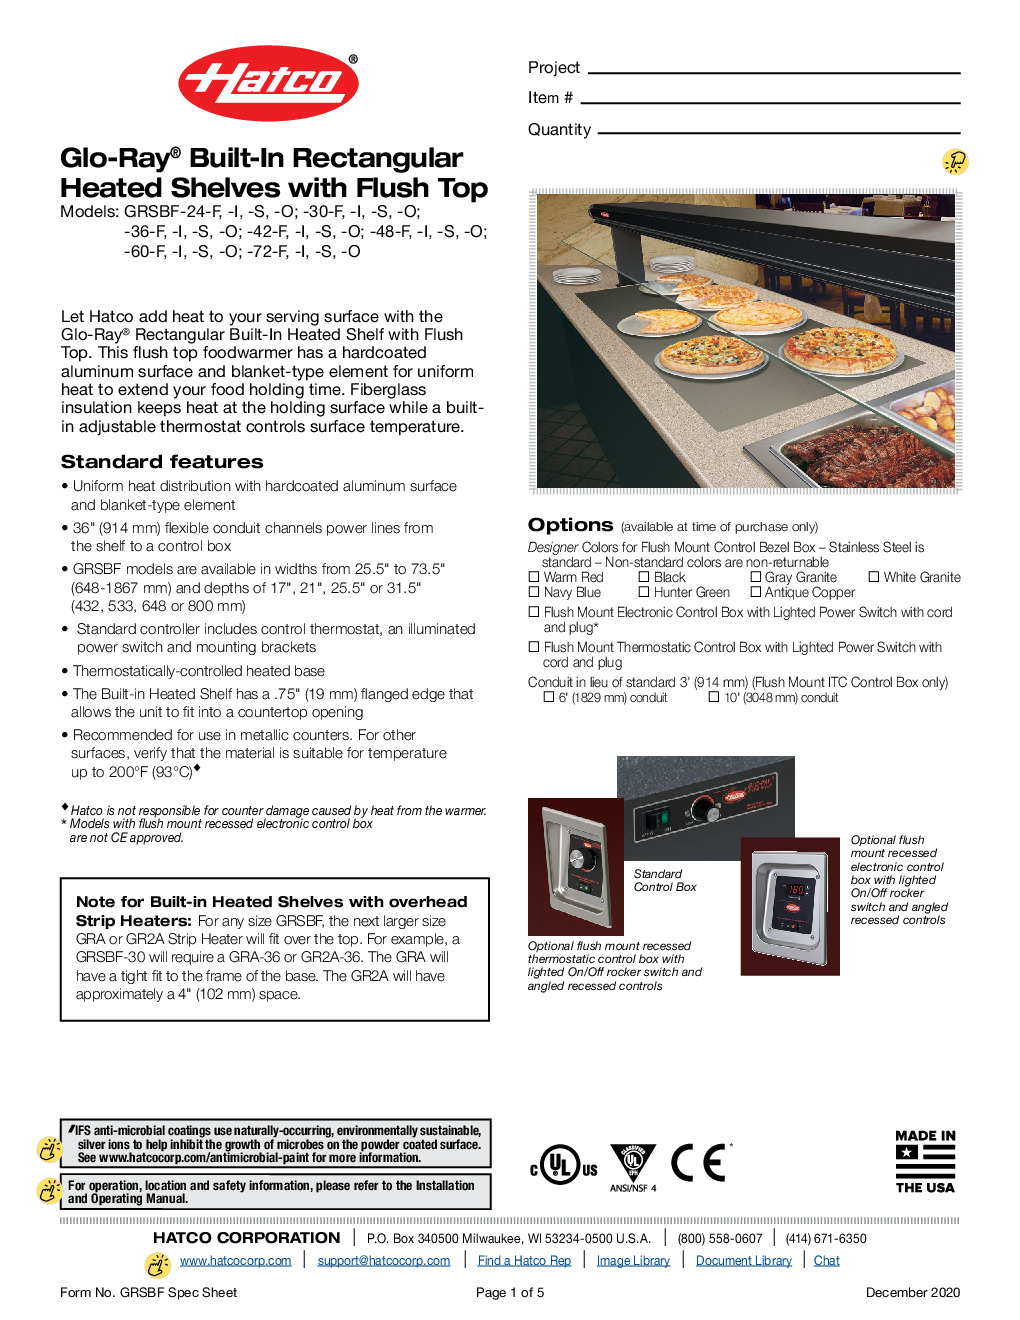 Hatco GRSBF-24-I-120QS Heated Shelf Food Warmer